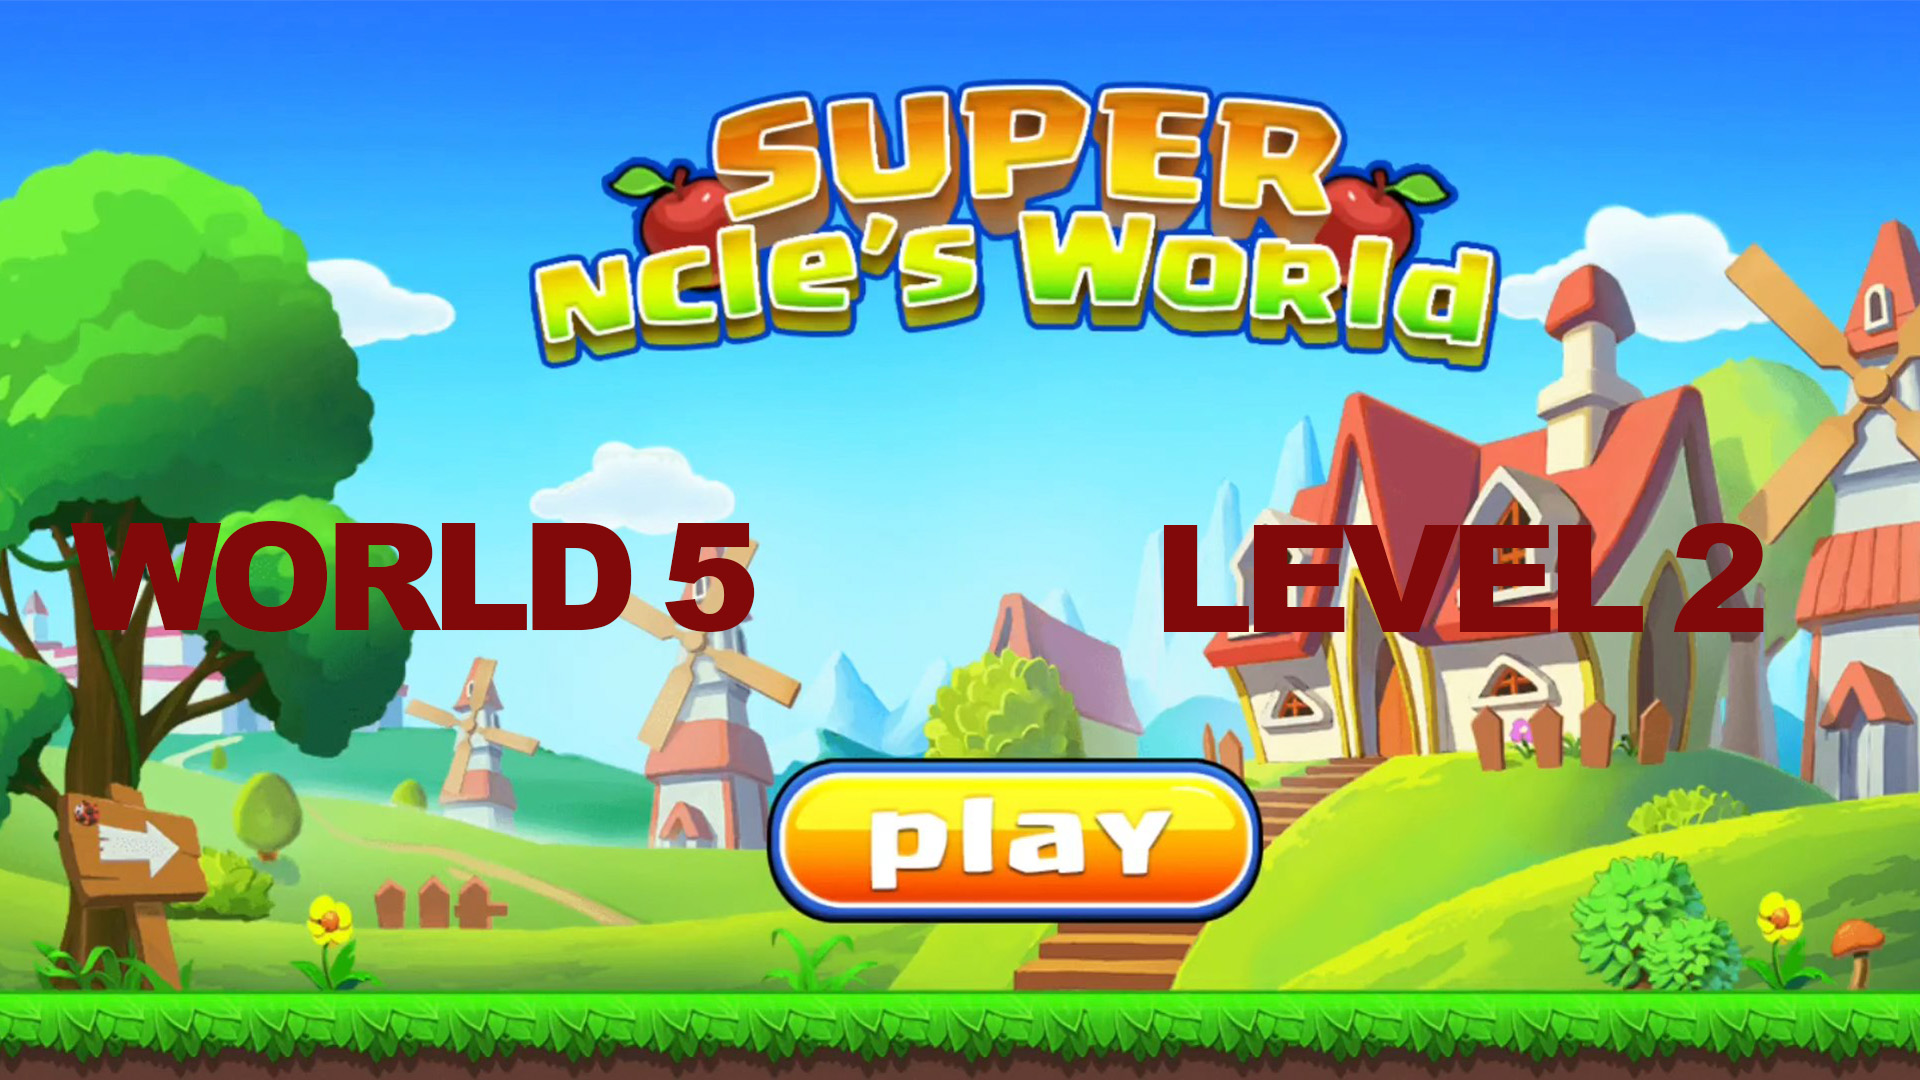 Super ncle's  World 5. Level 2.